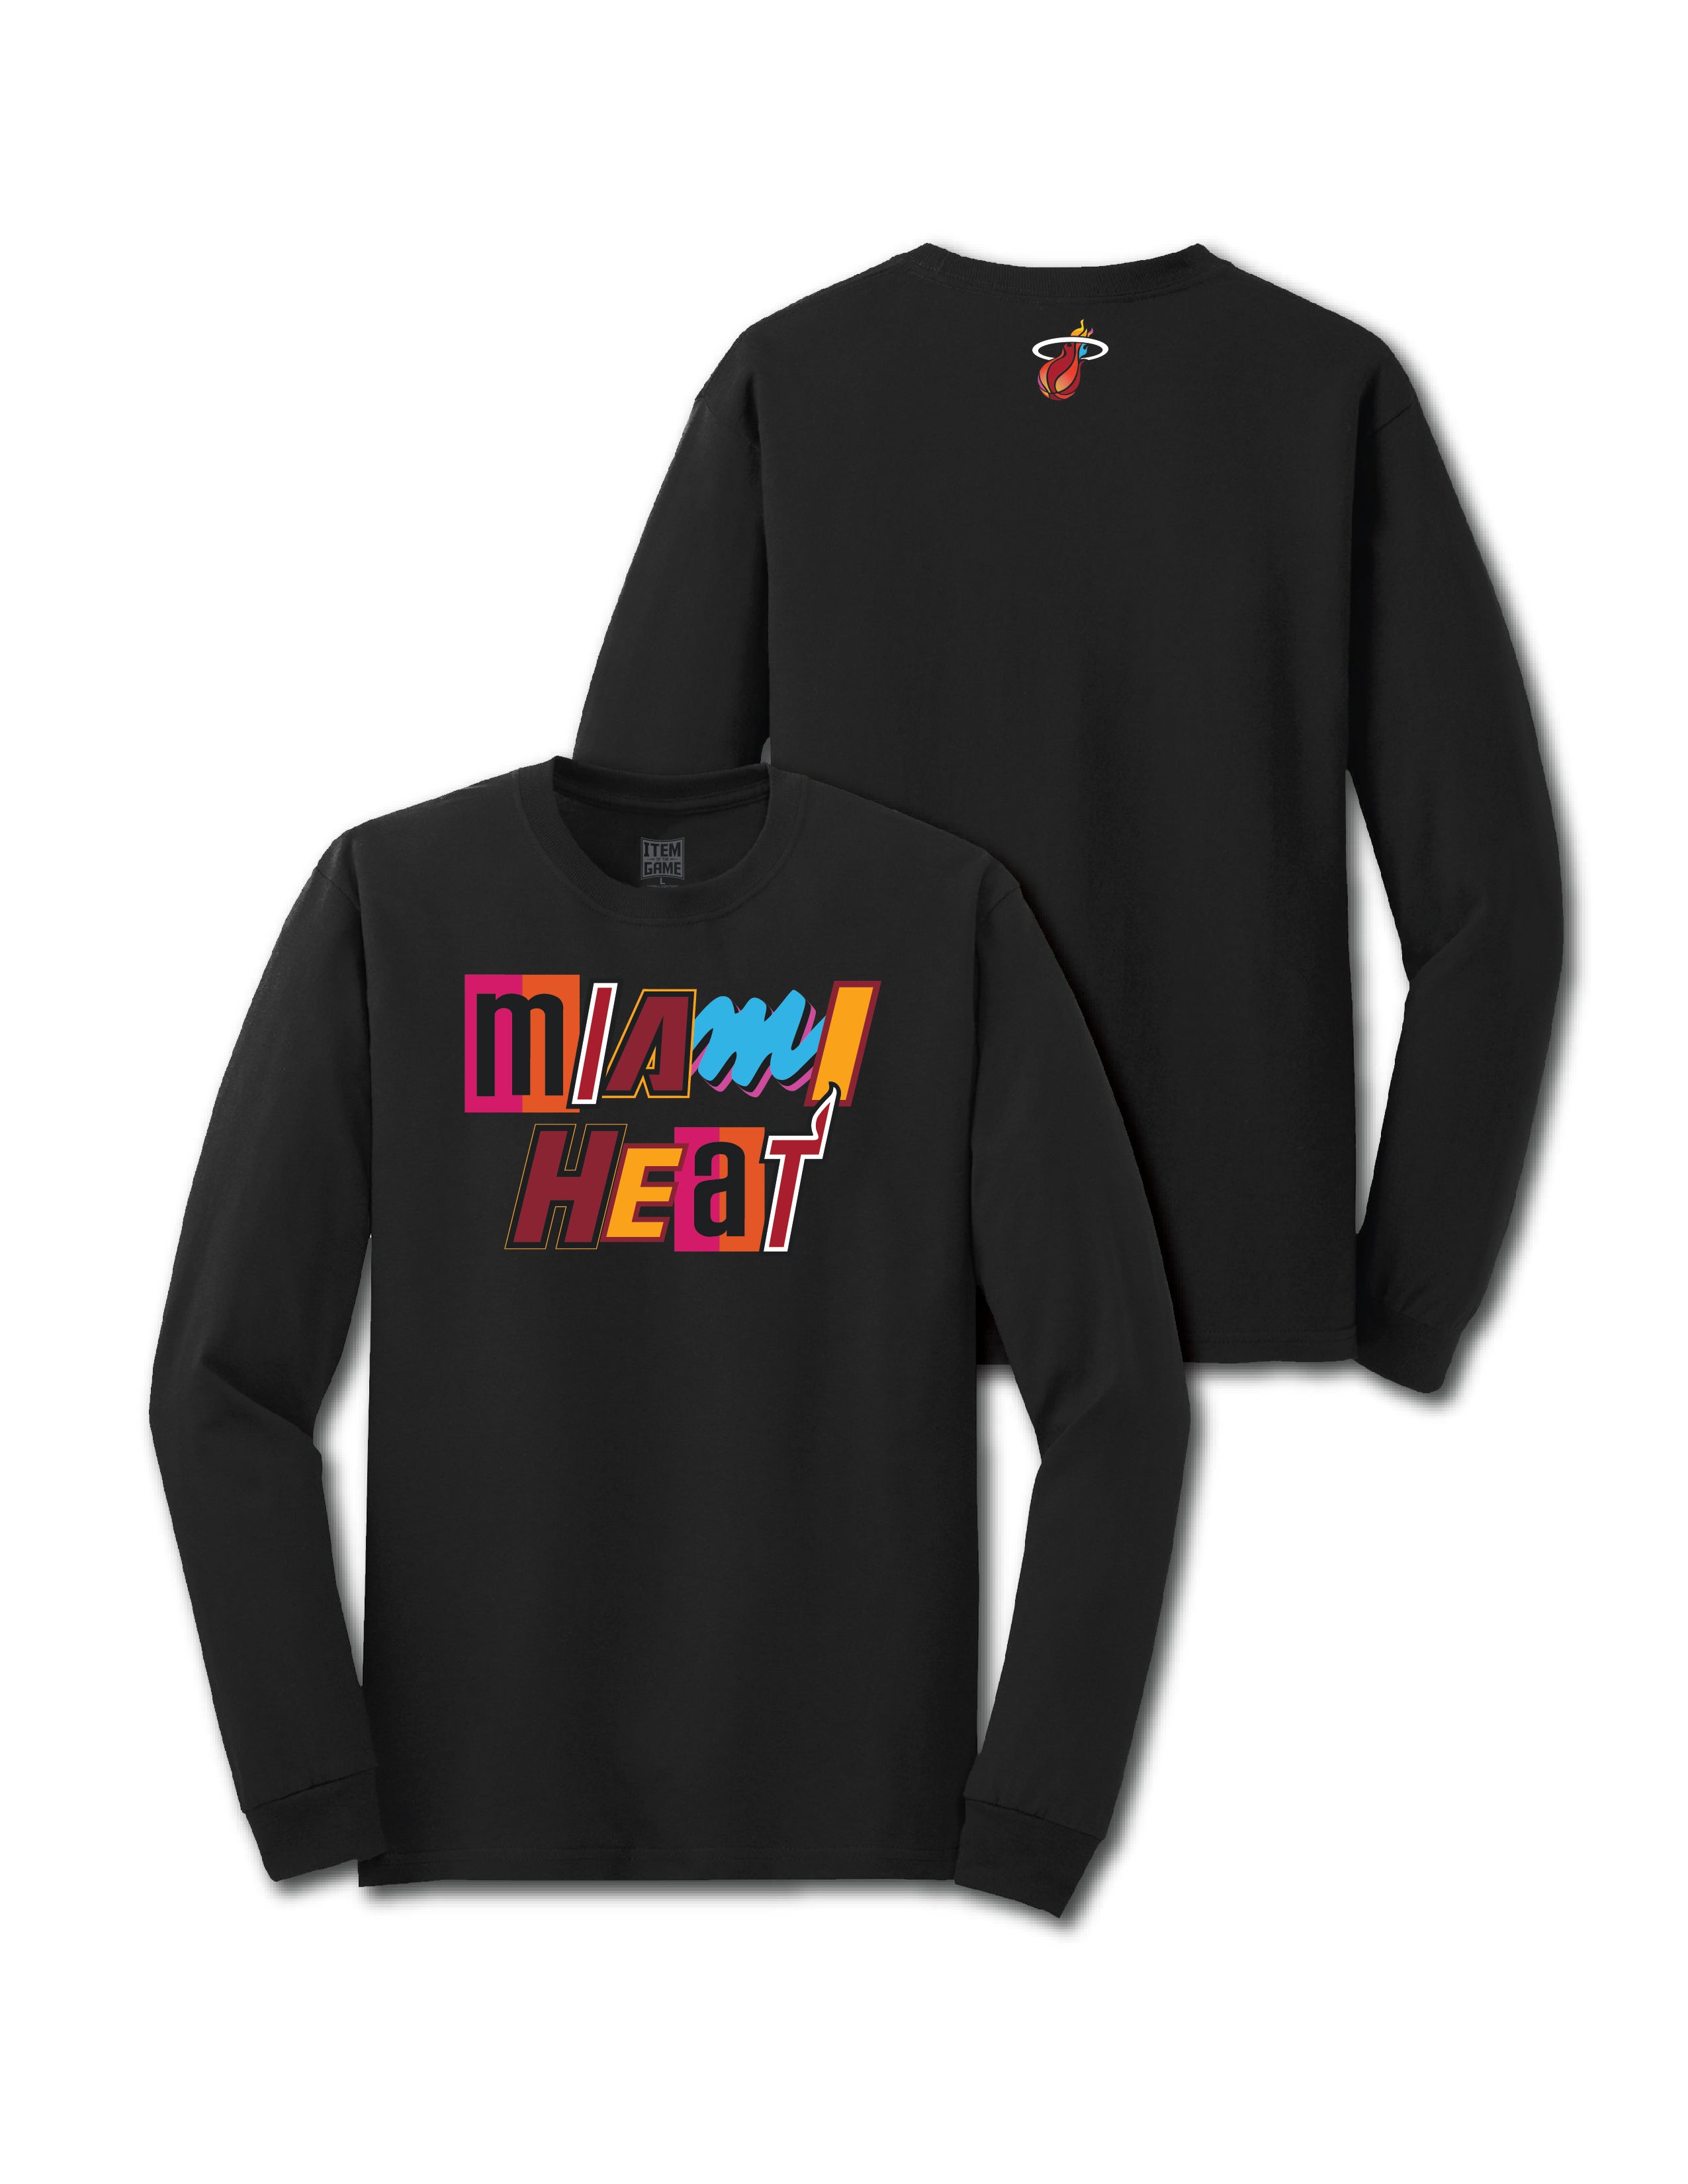 Miami Heat mashup logo T-shirt, hoodie, sweater, long sleeve and tank top